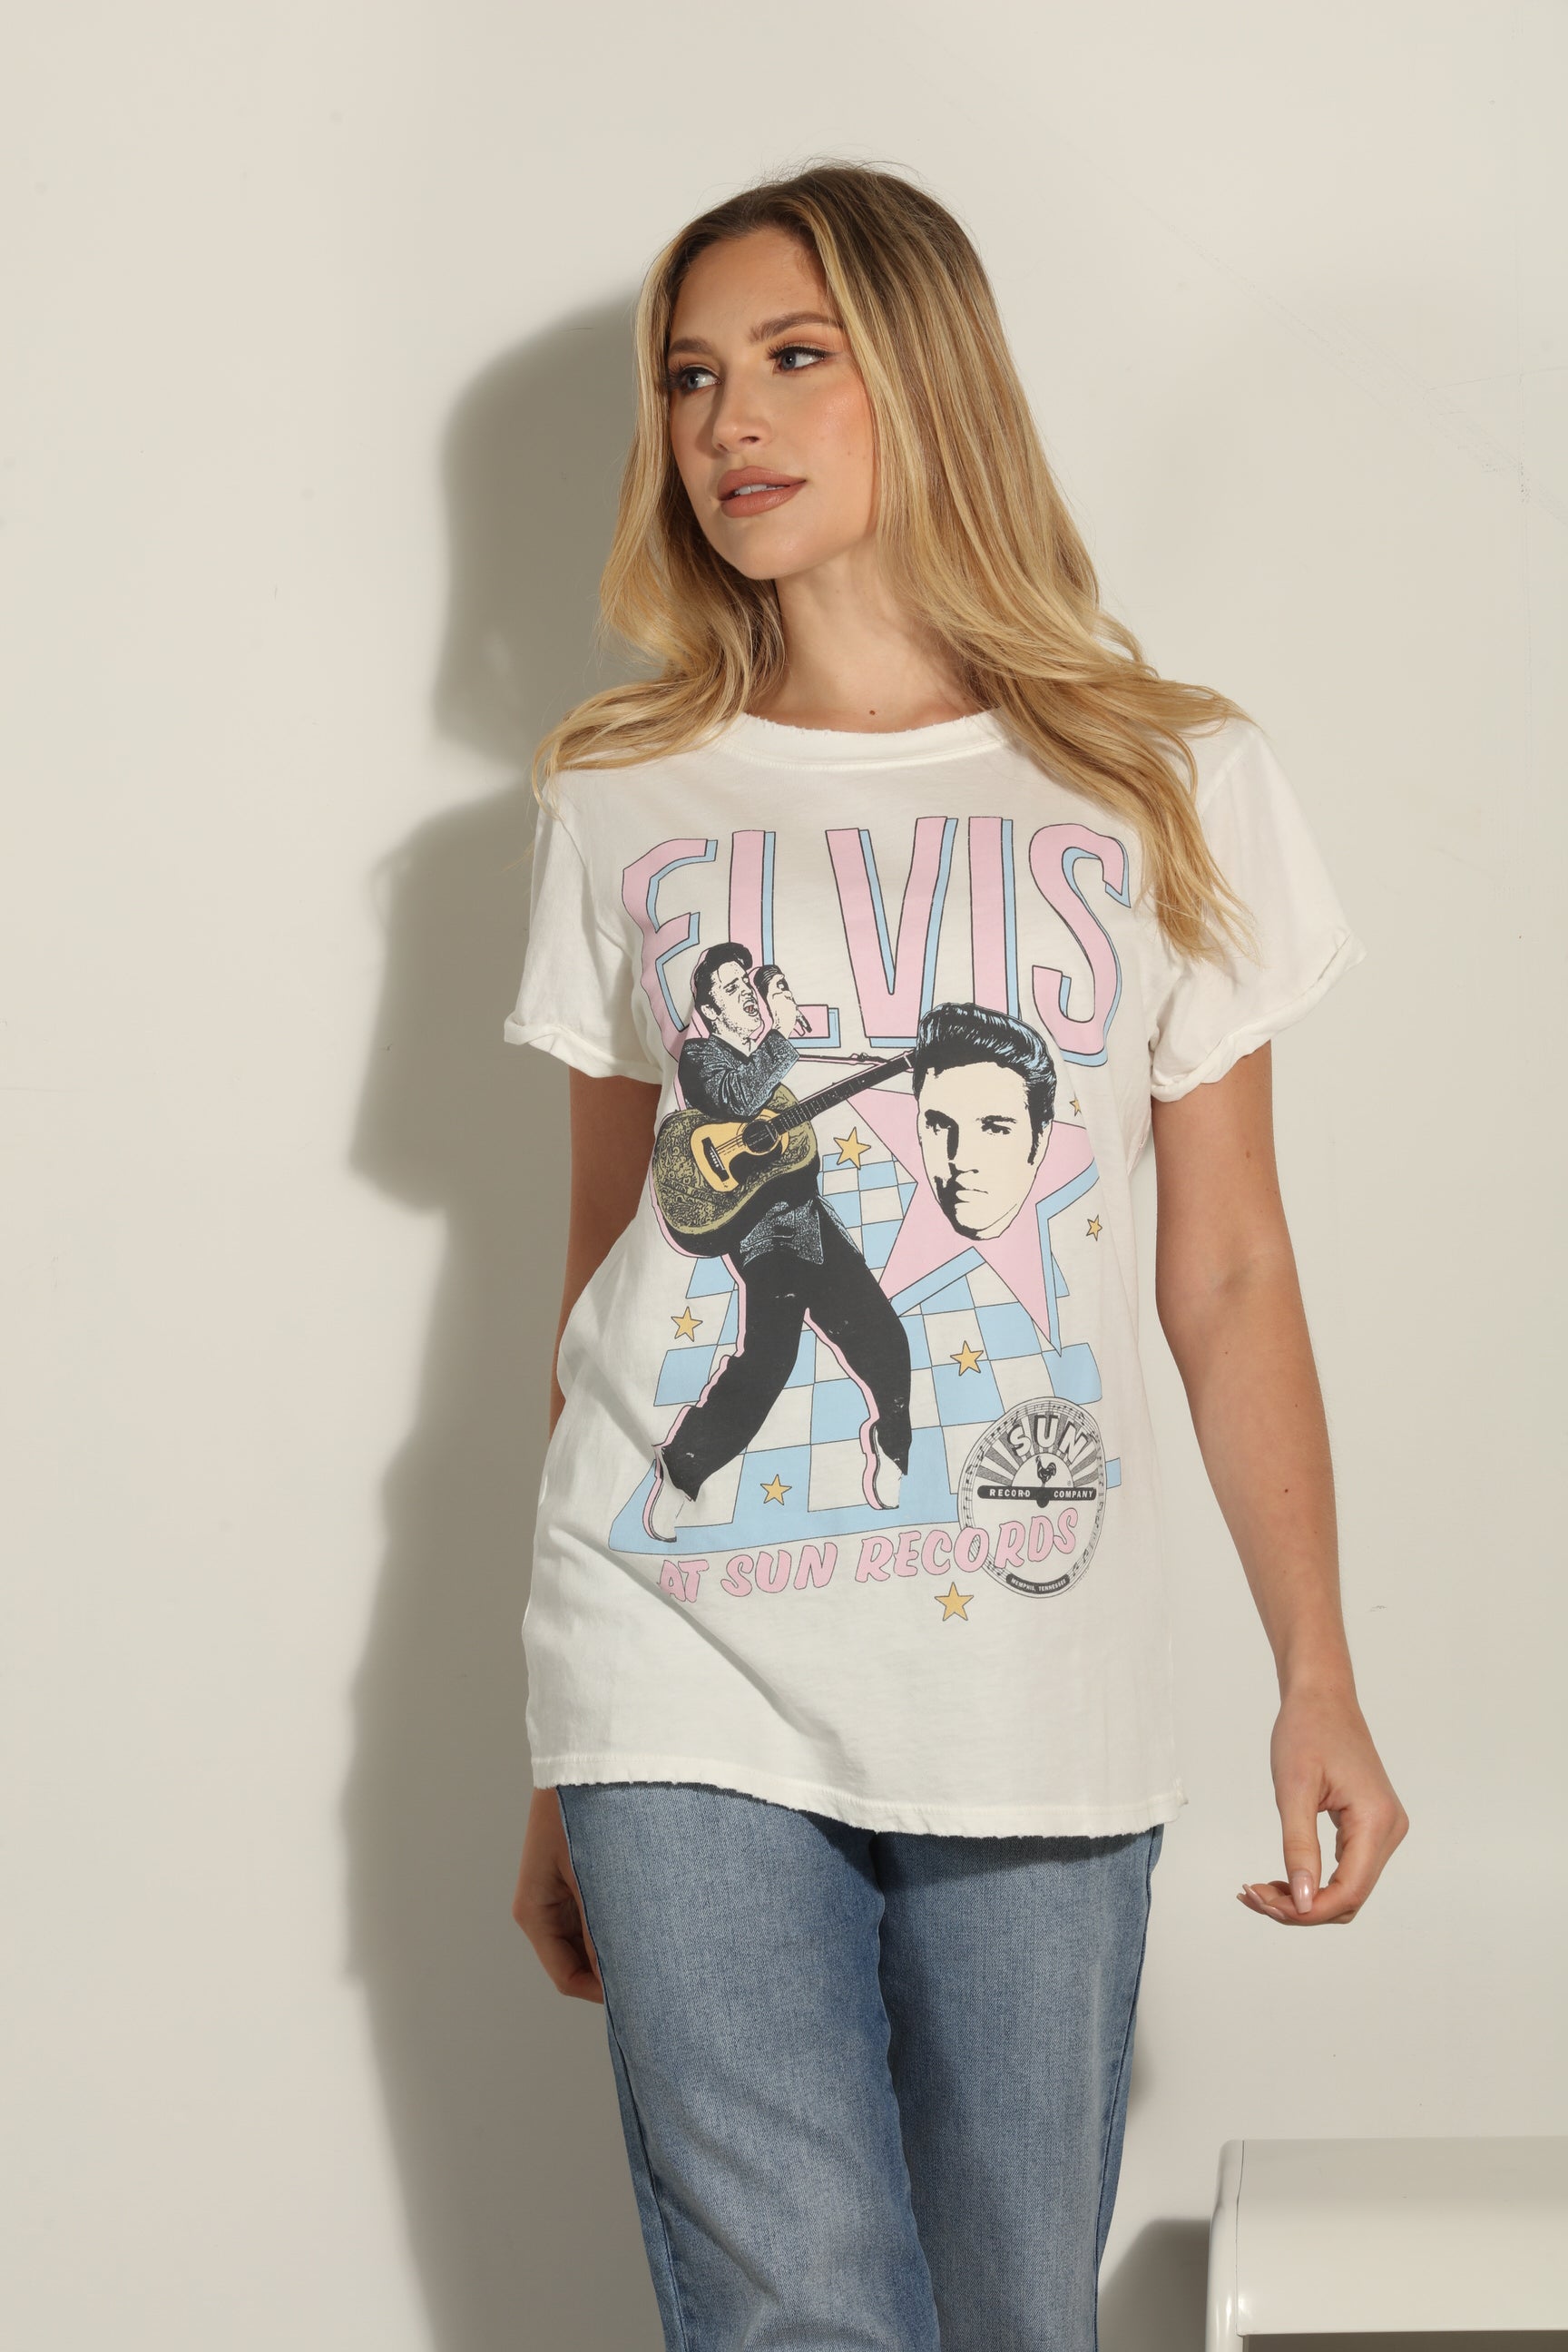 Elvis Presley X Sun Records Tee